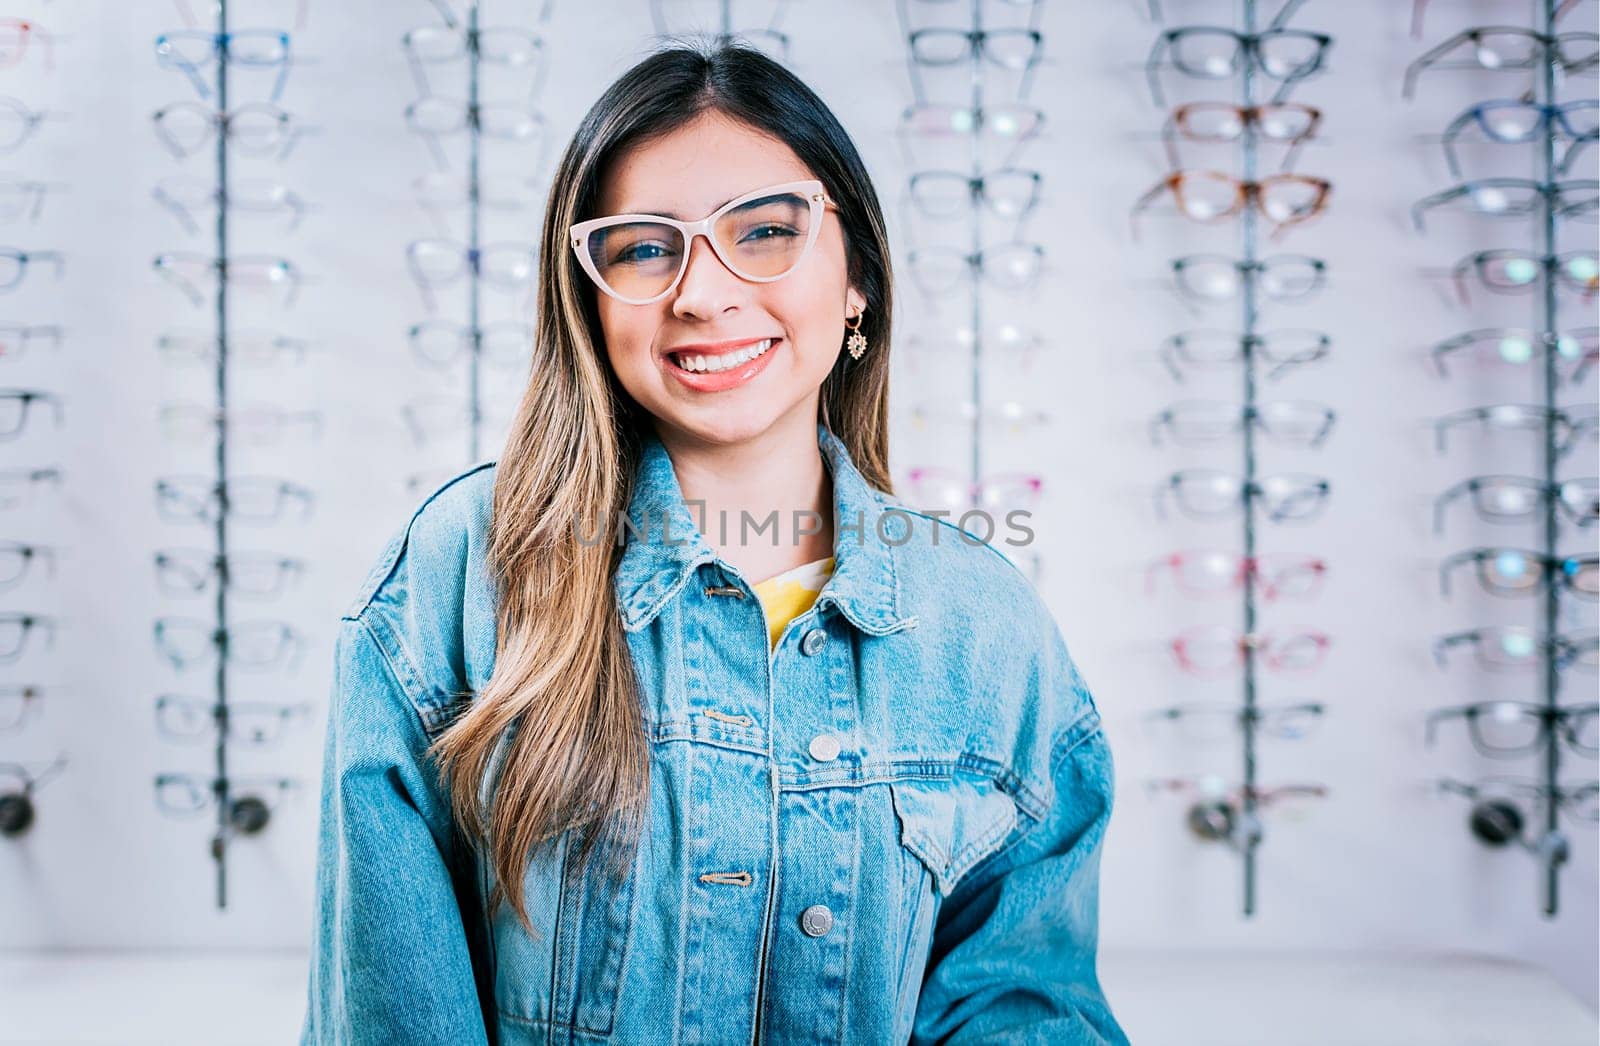 Smiling happy girl in eyeglasses with store eyeglasses background, Portrait of happy girl in glasses in an eyeglasses store by isaiphoto